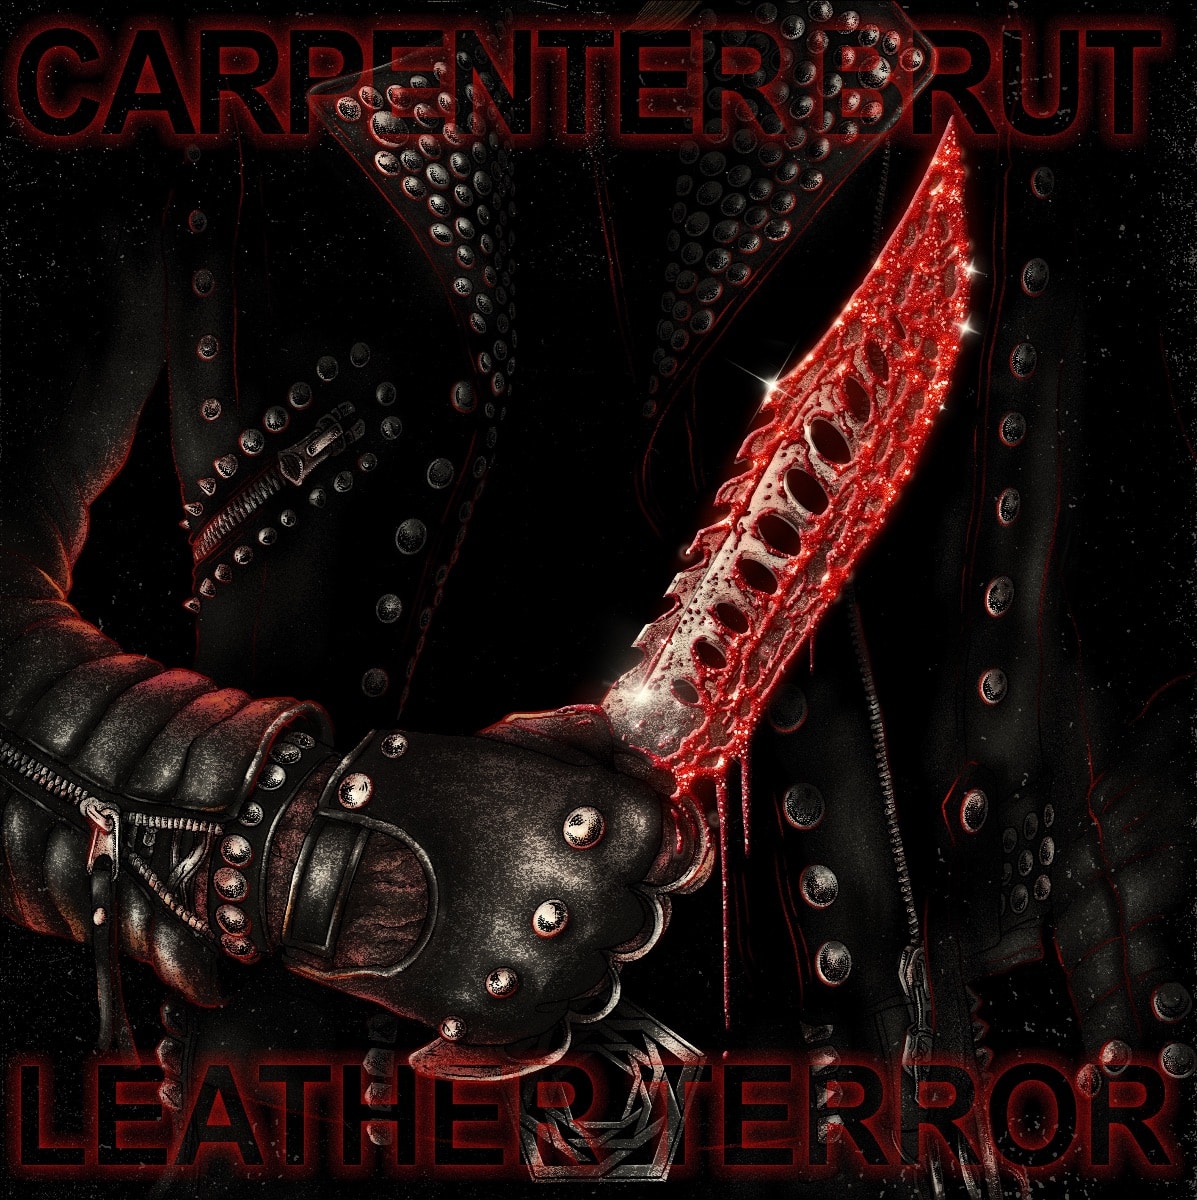 carpenter brut leather terror.jpg